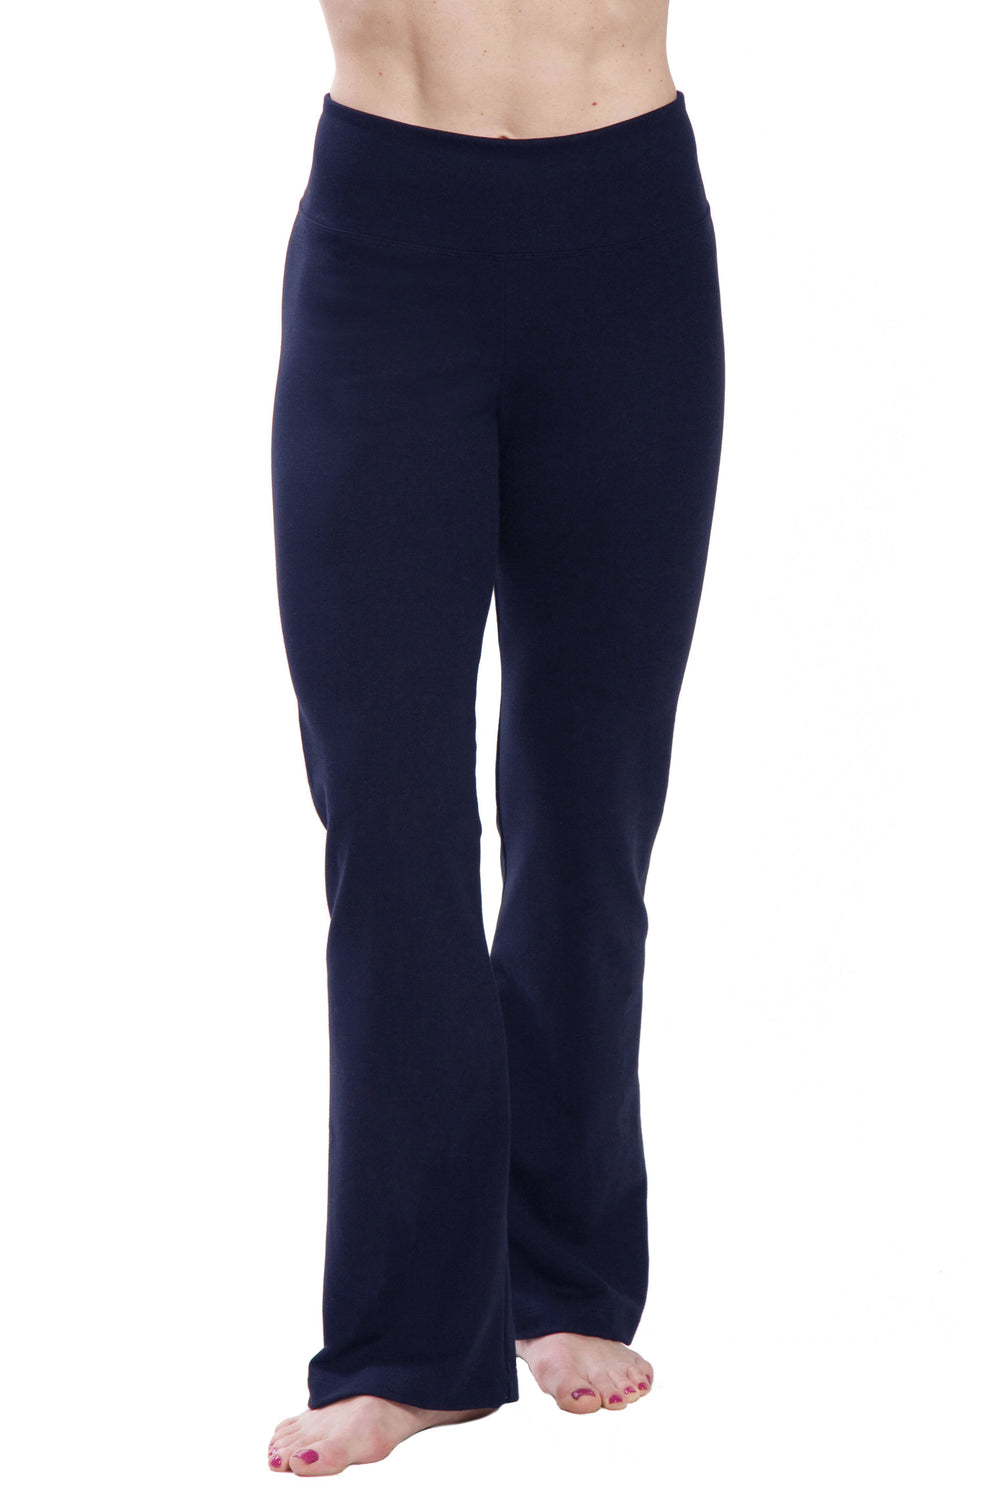 navy blue bootcut yoga pants